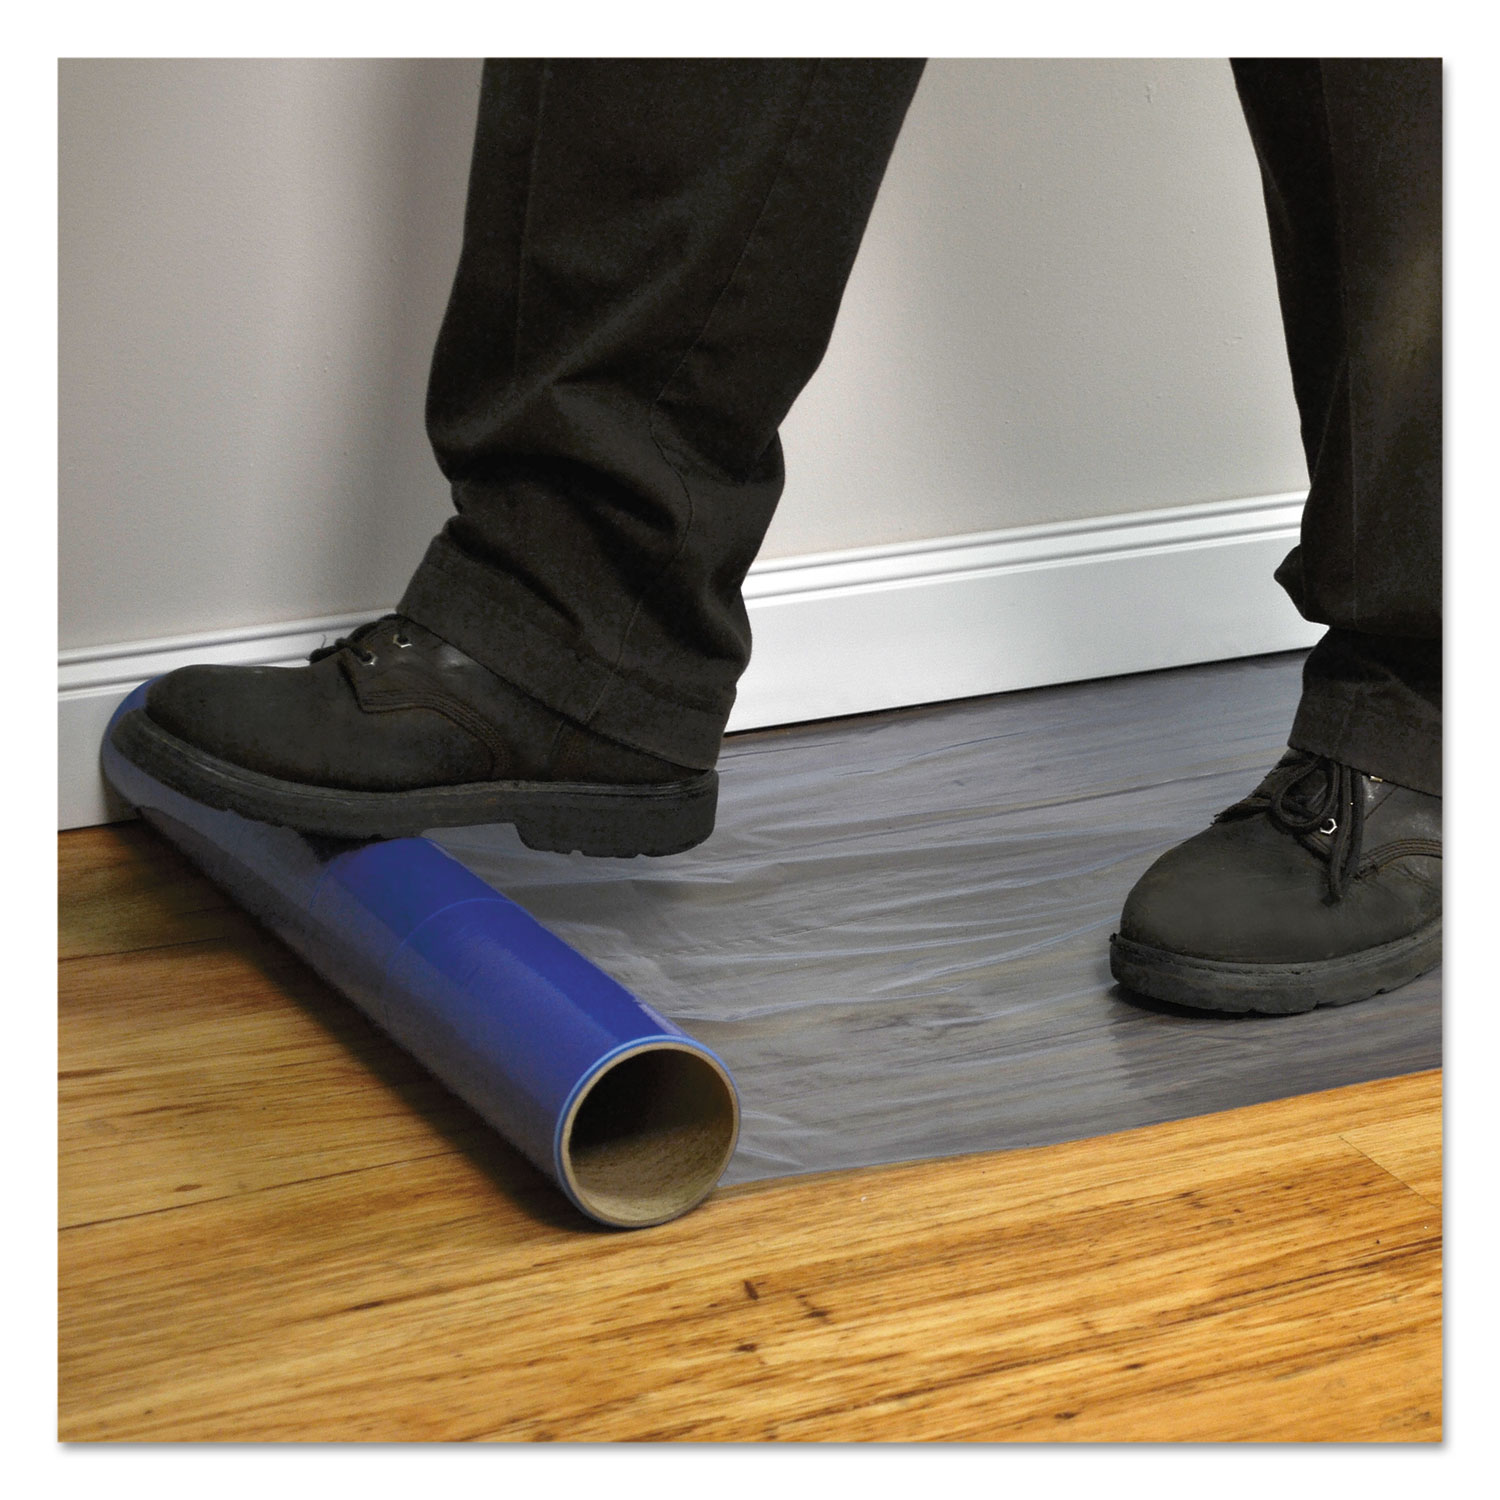 Roll Guard Temporary Floor Protection Film for Hard Floors, 36 x 2400, Blue